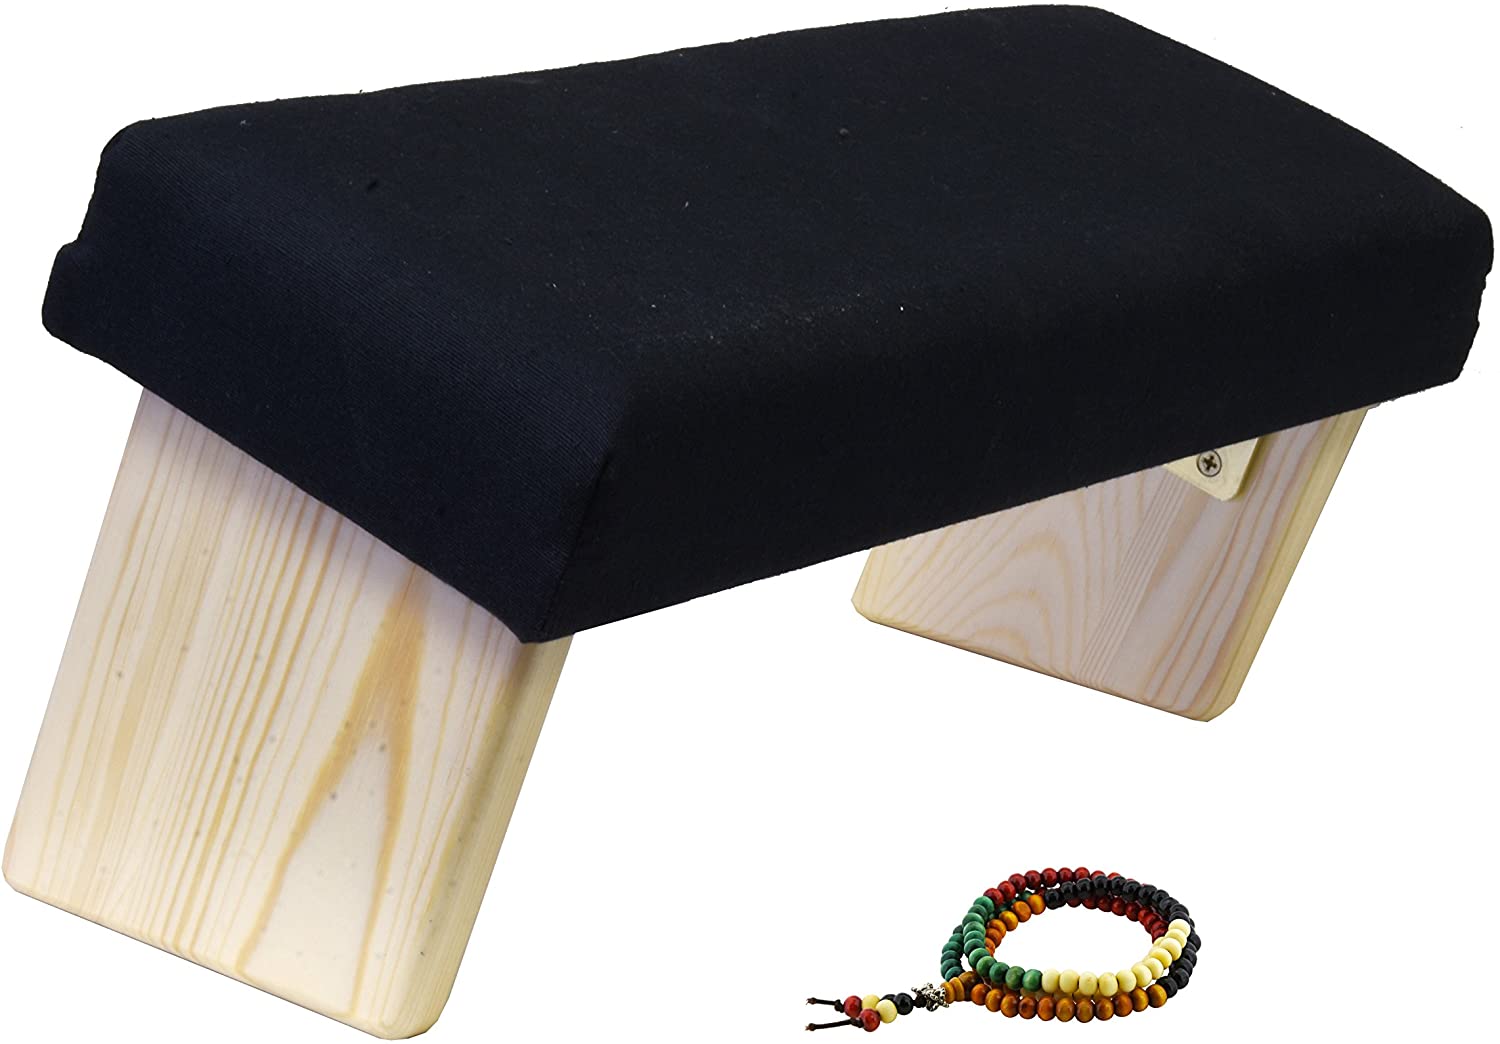 Mudra Crafts Wooden Foldable Meditation Bench Kneeling Stool for Prayer Kneeler - Ergonomic Meditation Seat Seiza Bench for Yoga - Meditation Stool with Cushion